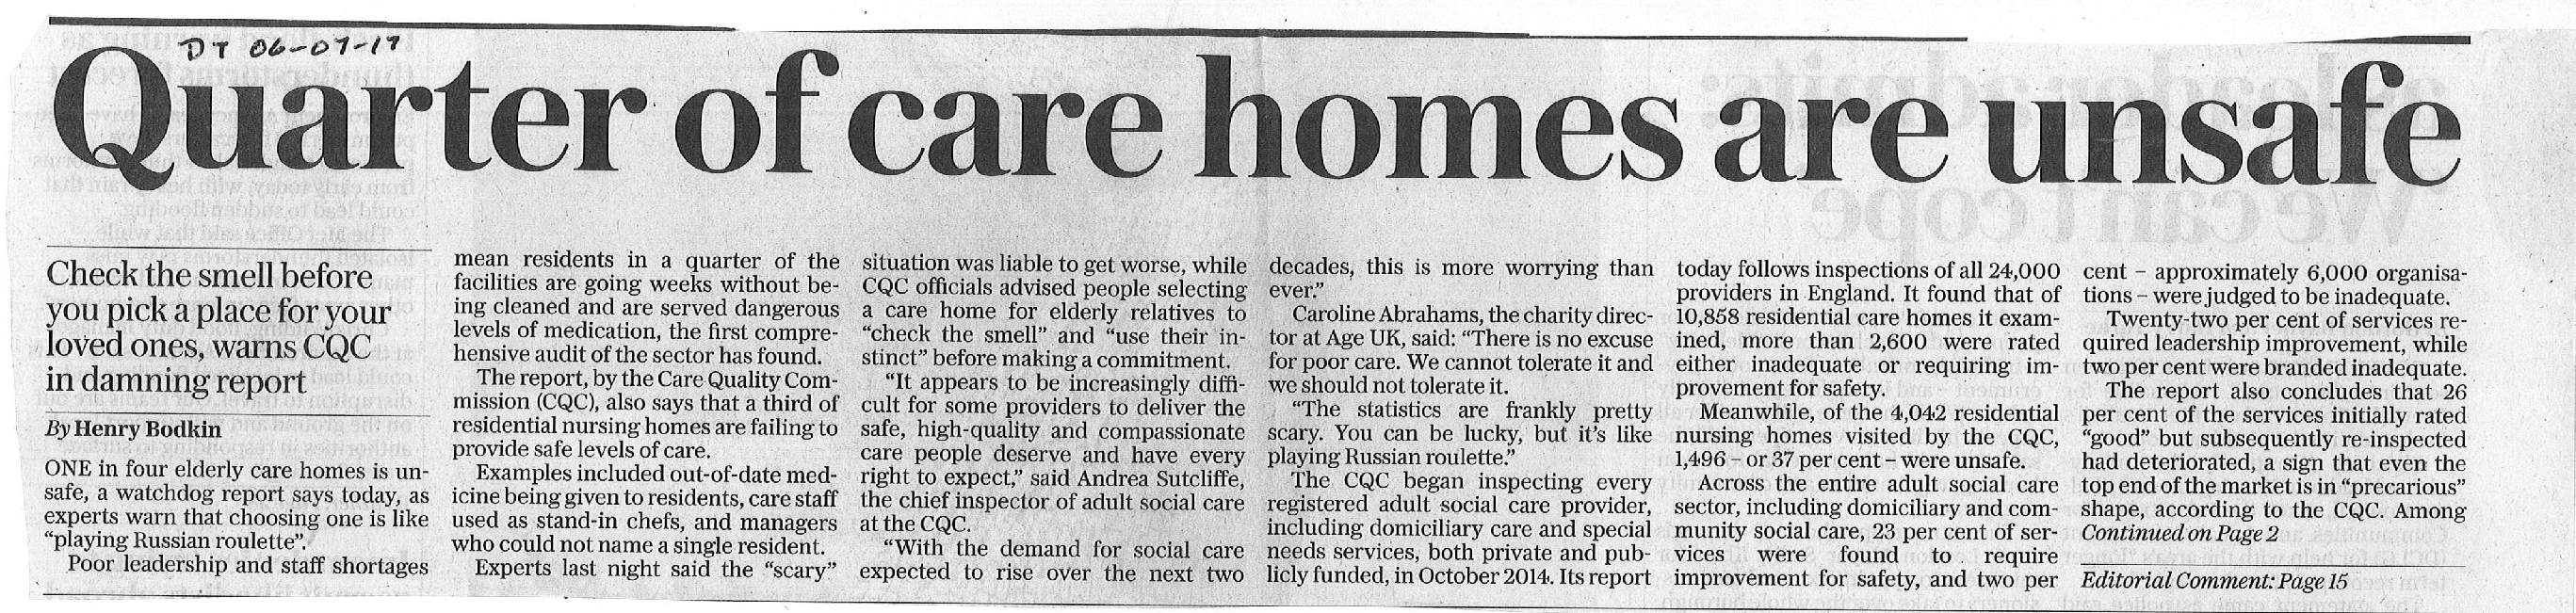 Quarter of care homes are unsafe